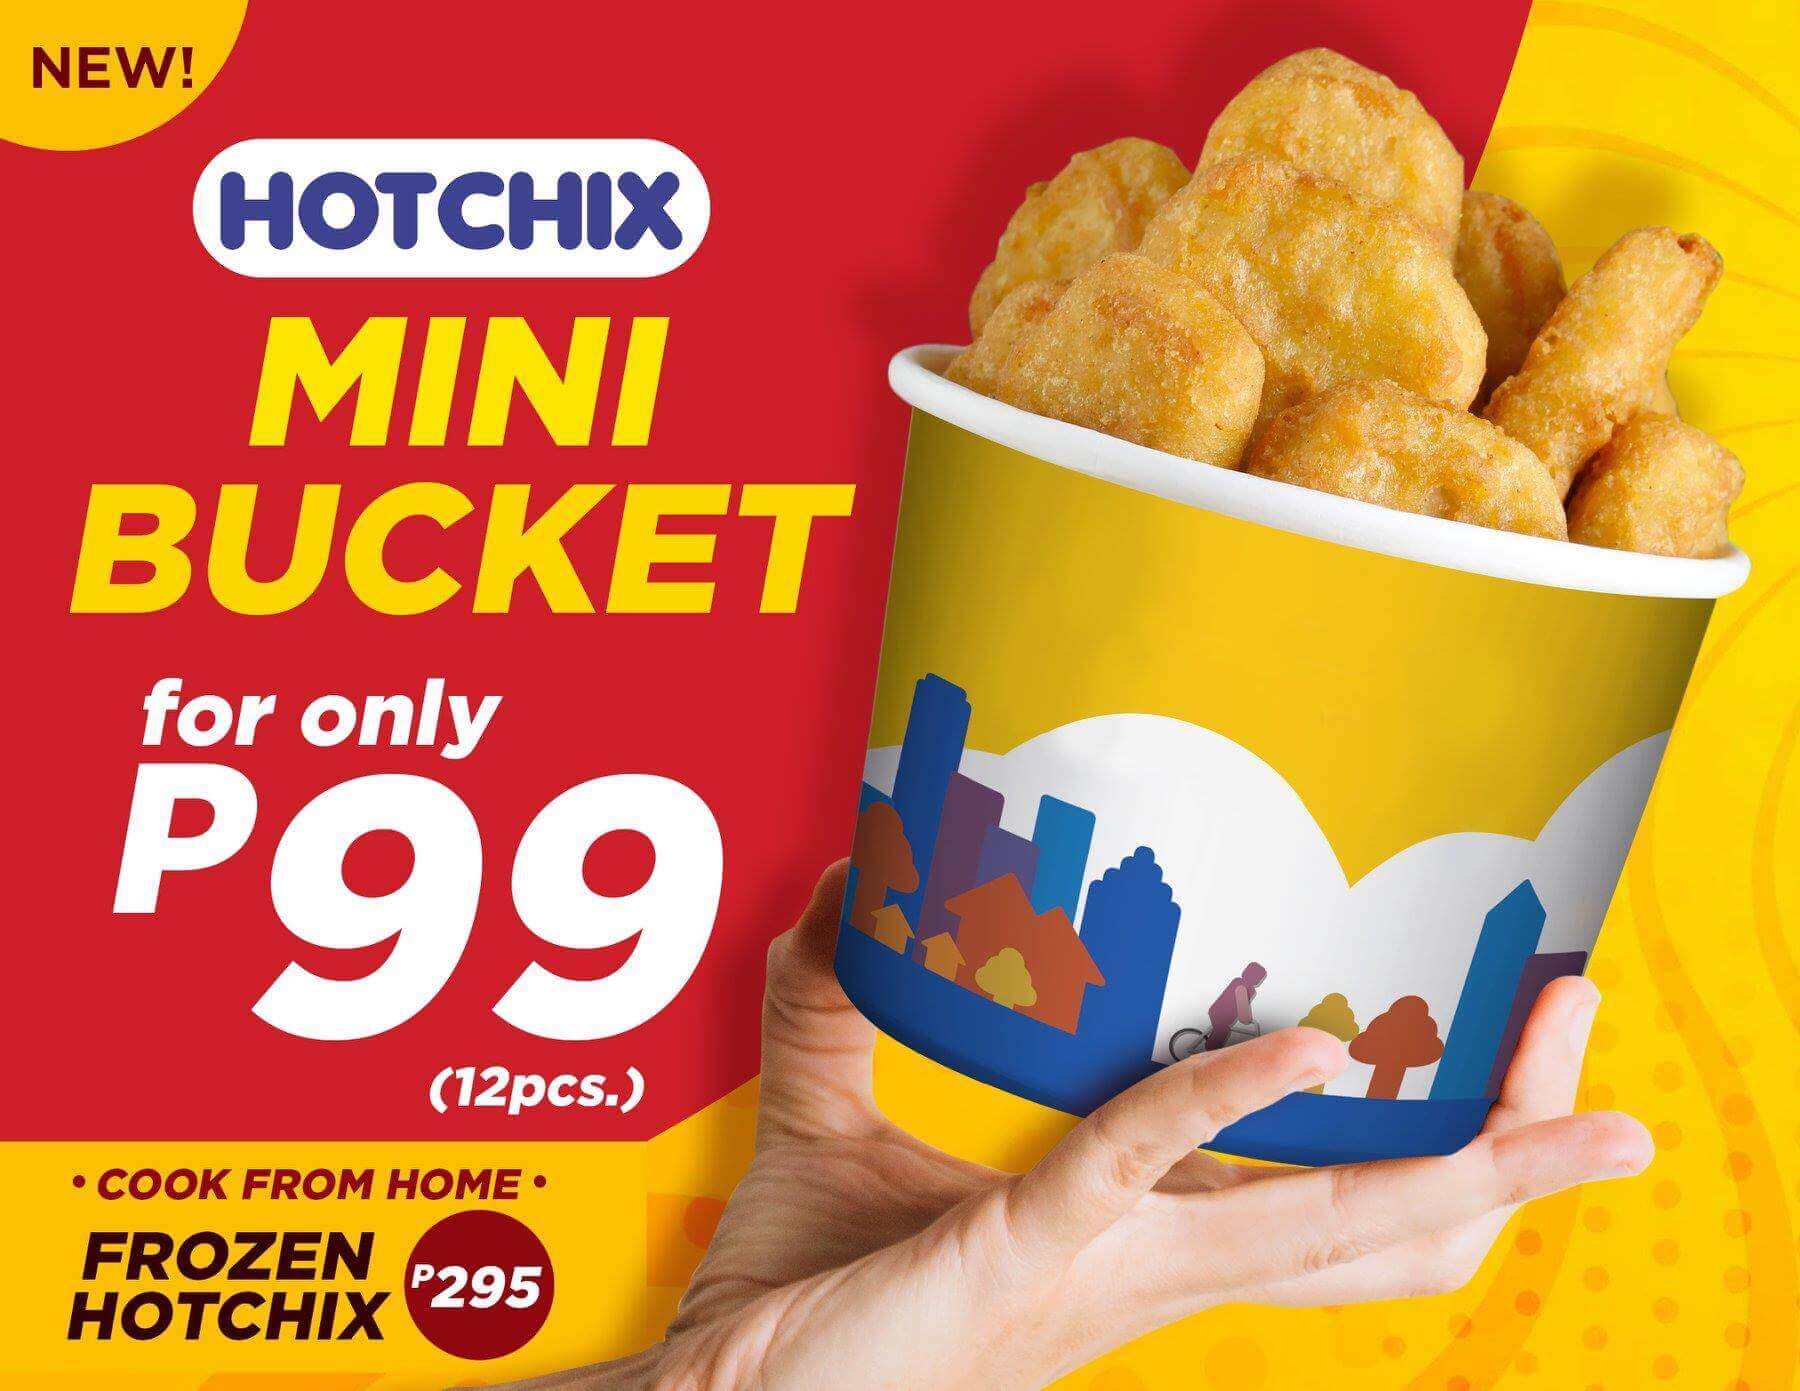 Hotchix Mini Bucket For 99 Ministop Philippines Deals Pinoy